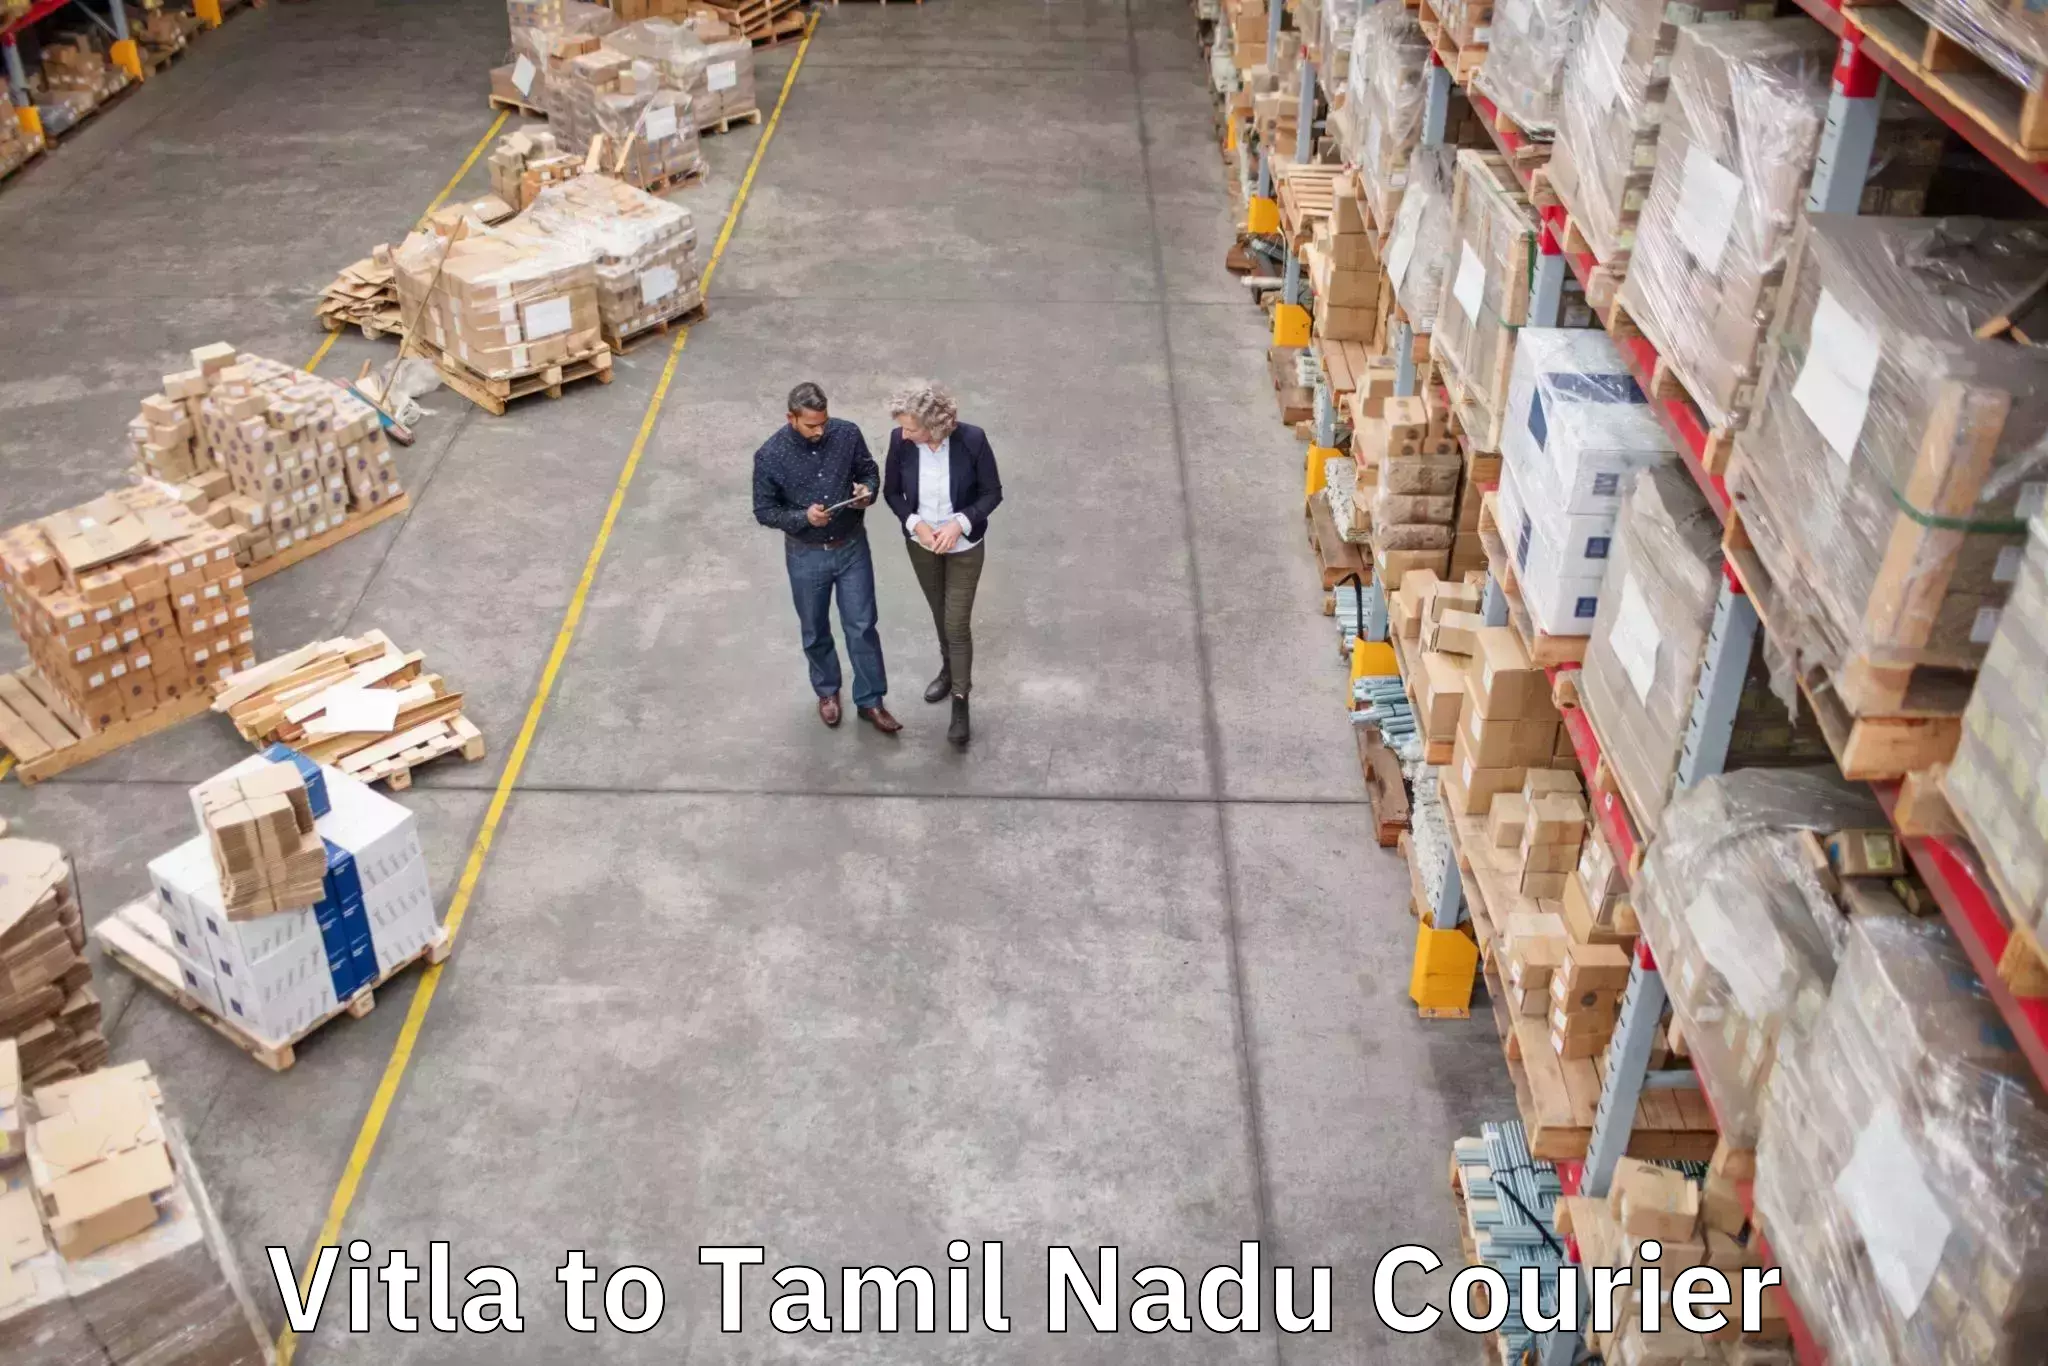 Nationwide luggage courier Vitla to Tamil Nadu